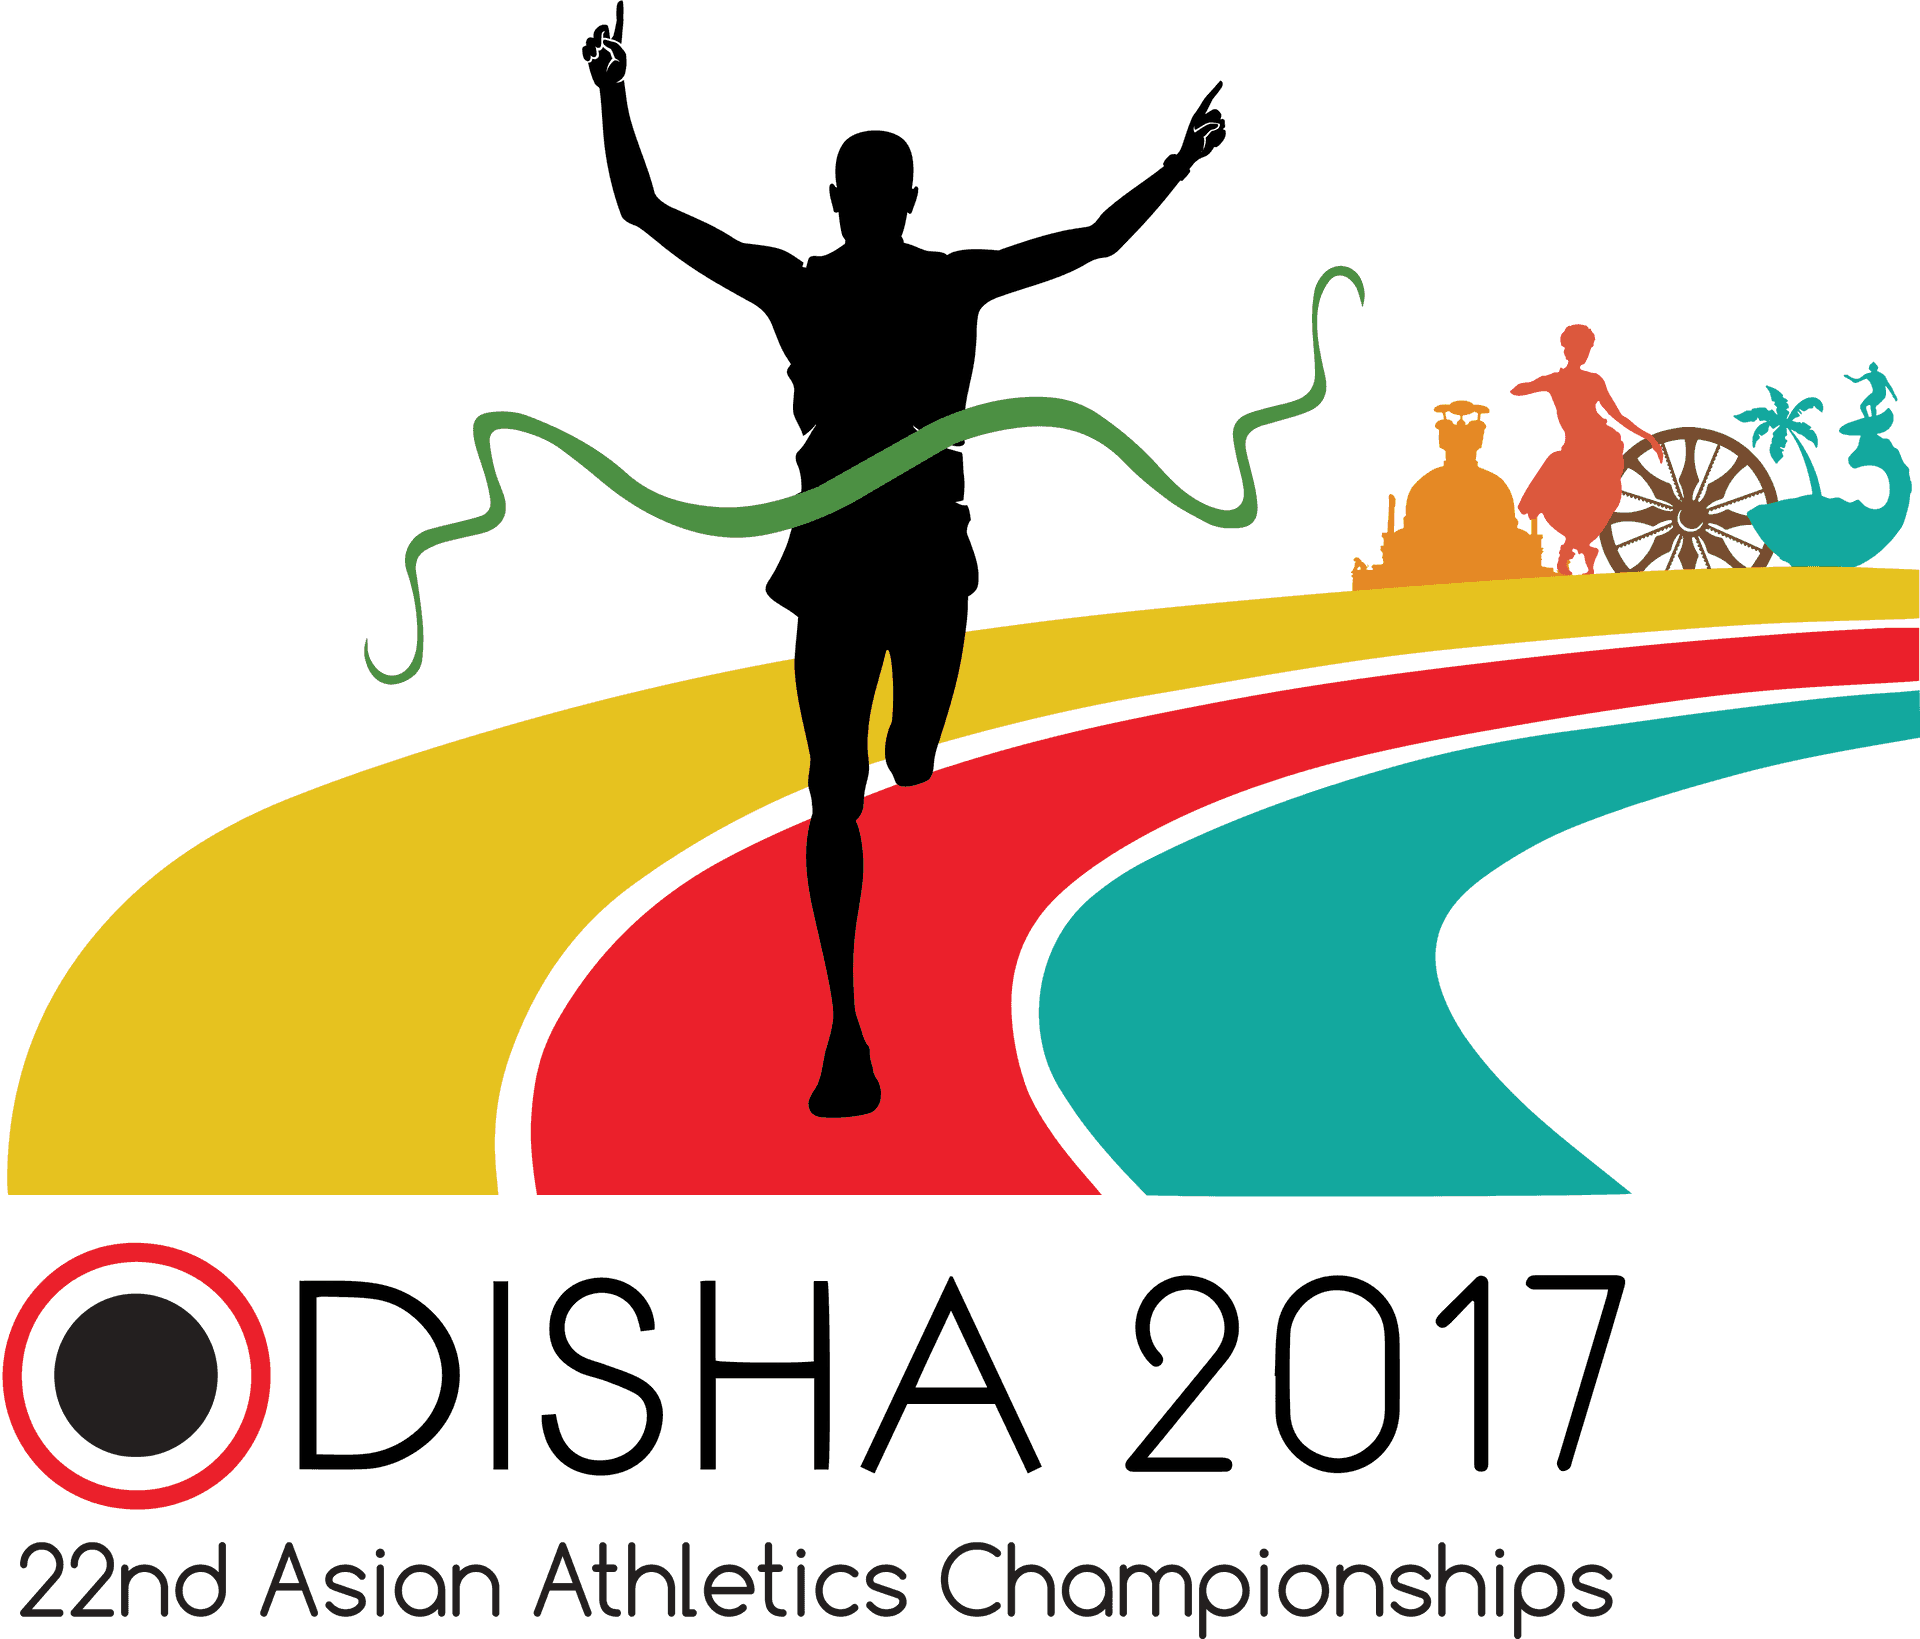 22nd Asian Athletics Championships Odisha2017 Logo PNG image